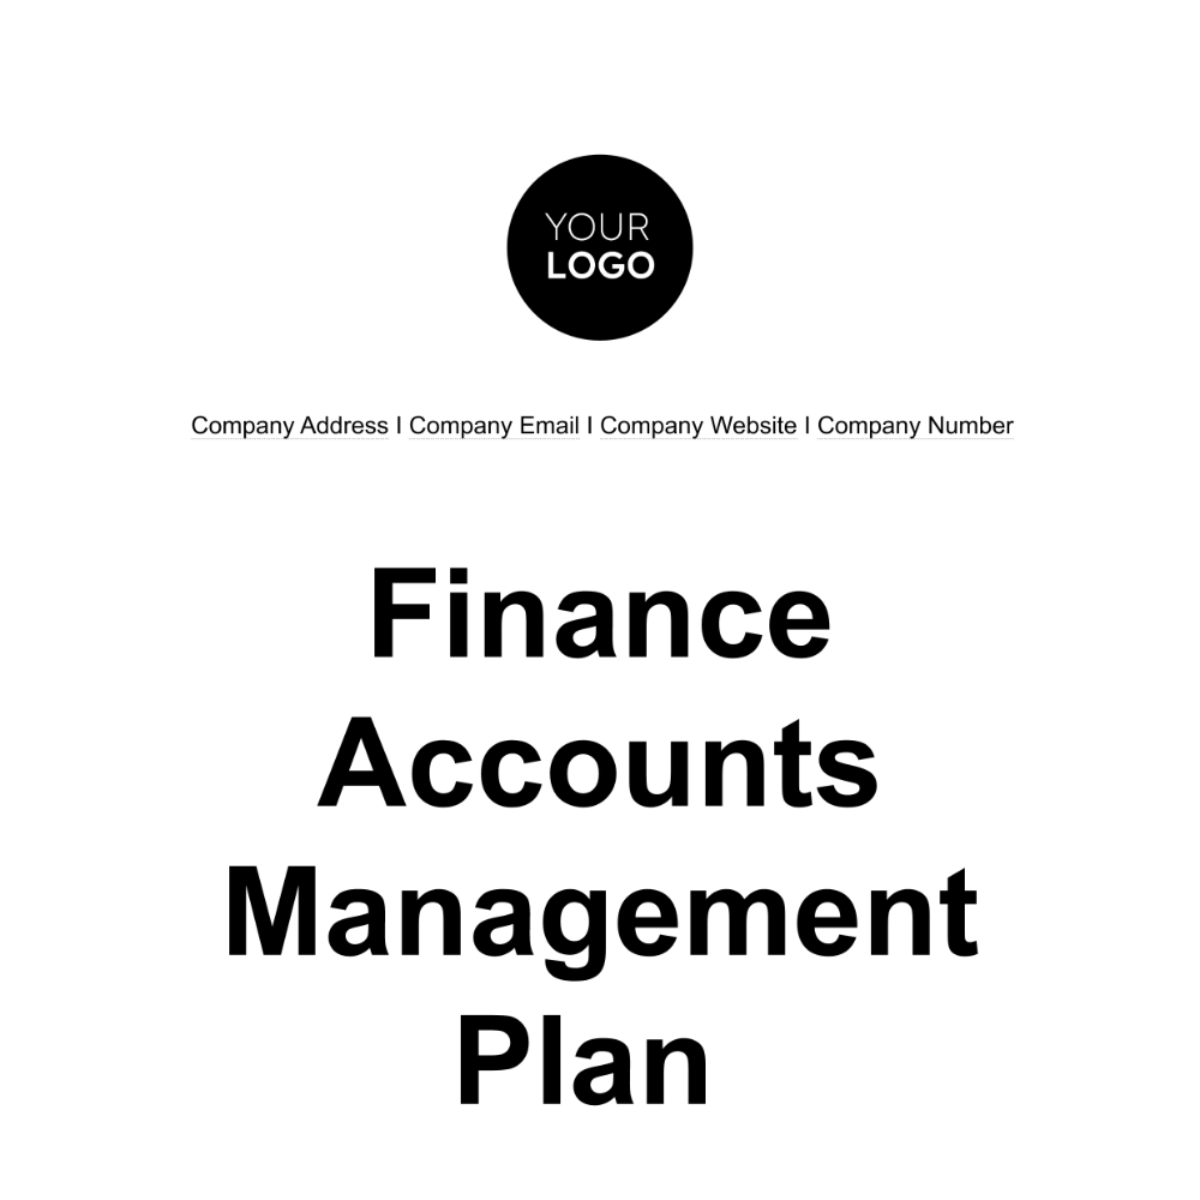 Finance Accounts Management Plan Template